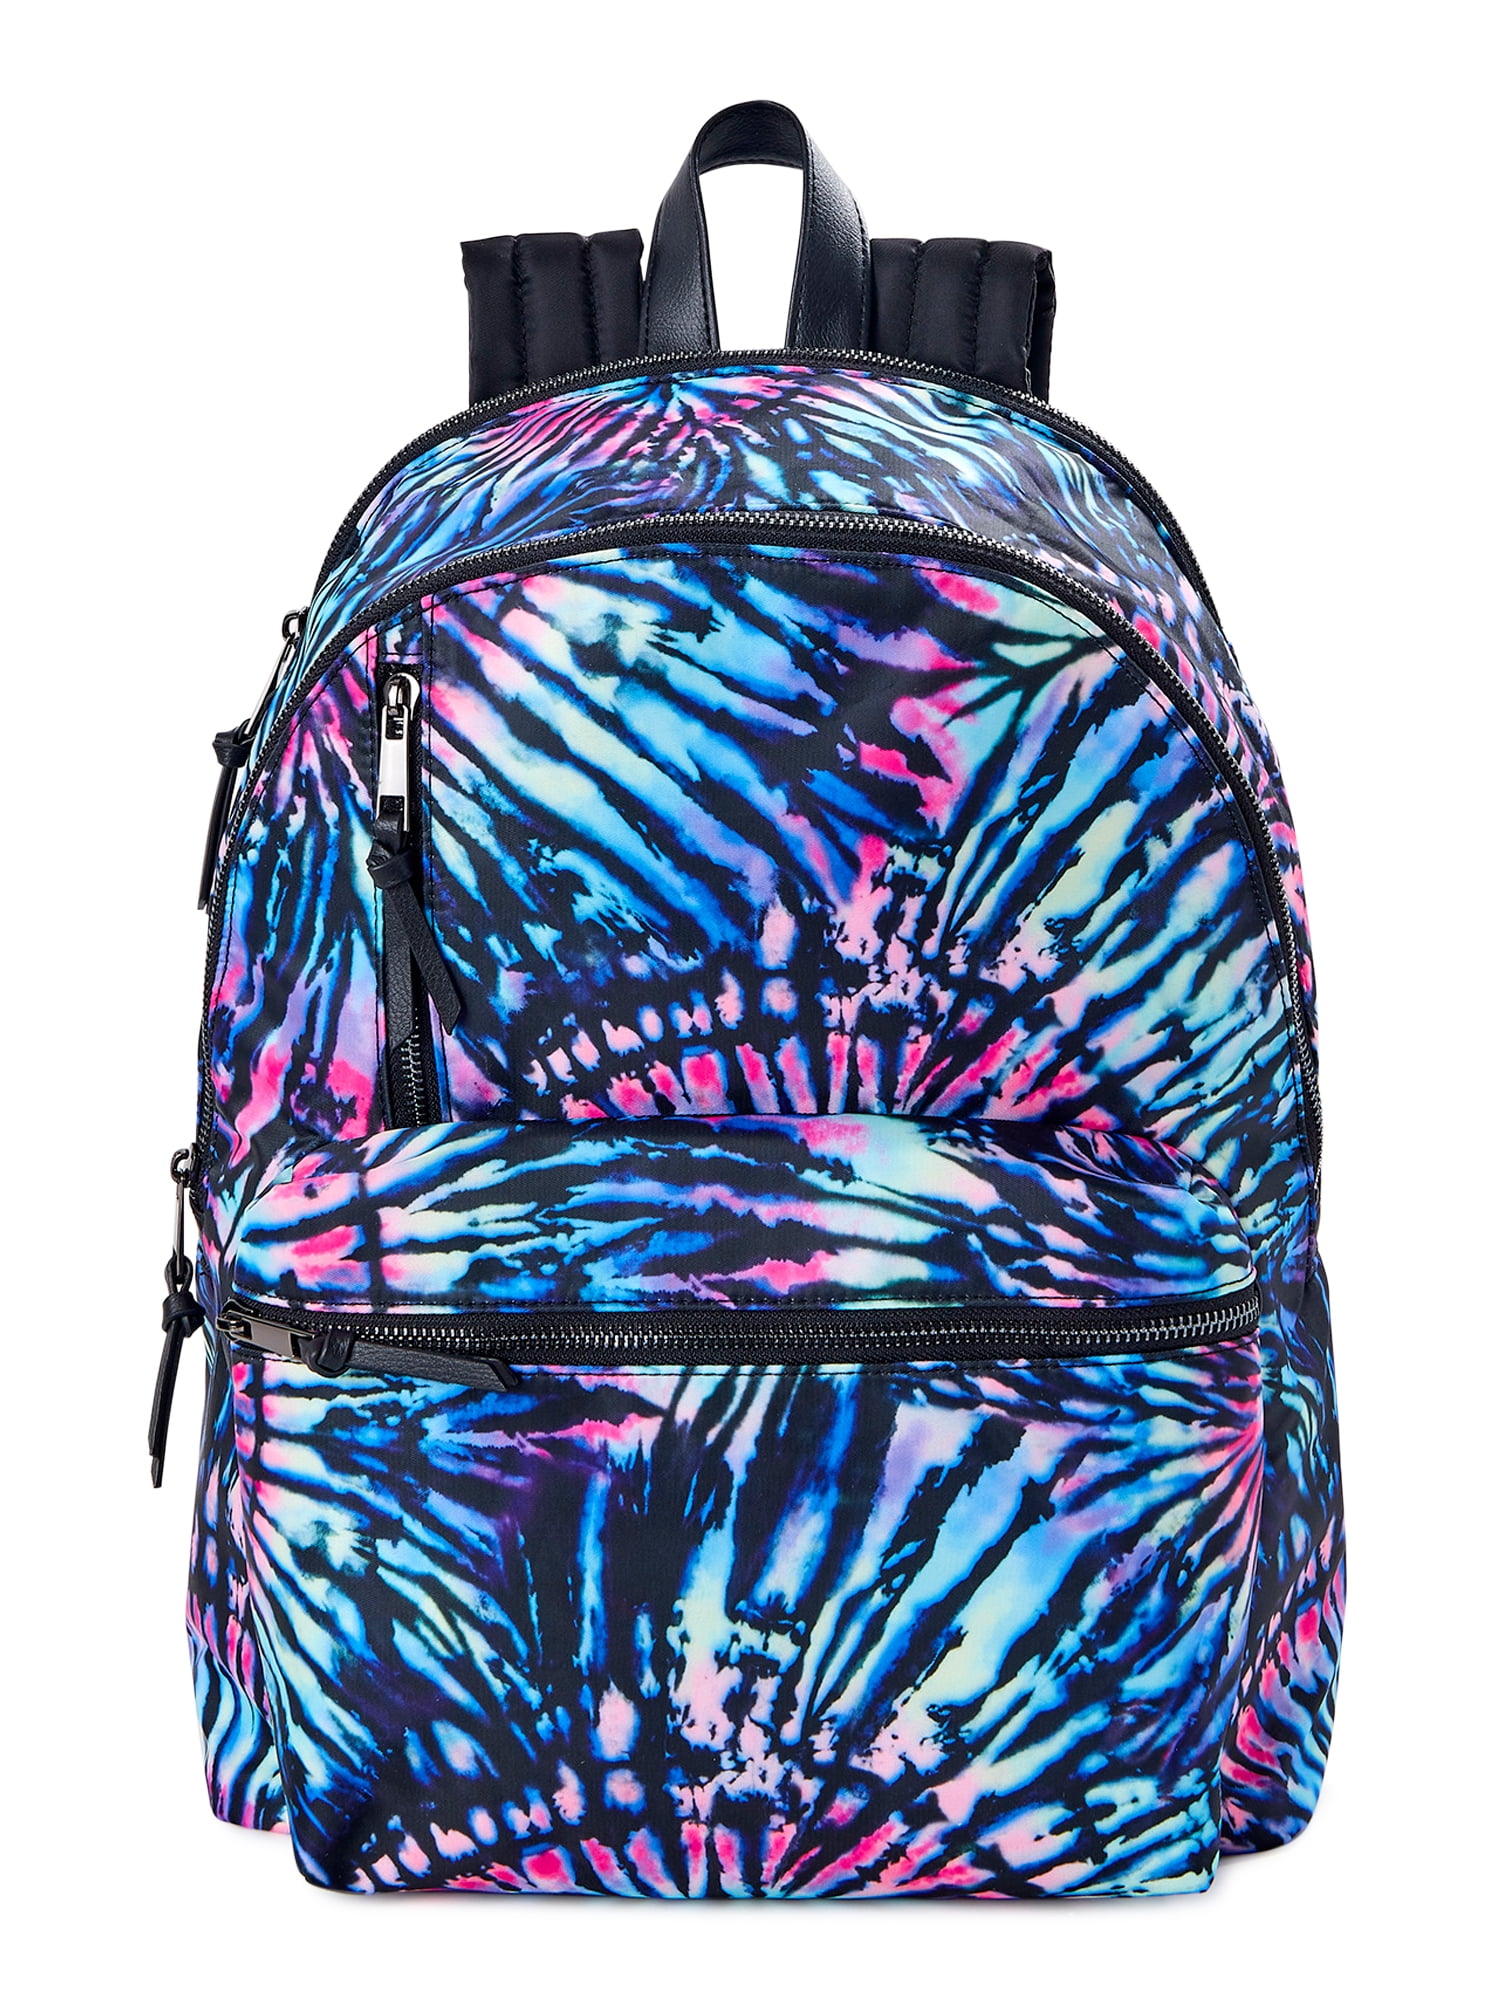 No Boundaries Women's Dome Zip Backpack, Multi-Color TieDye